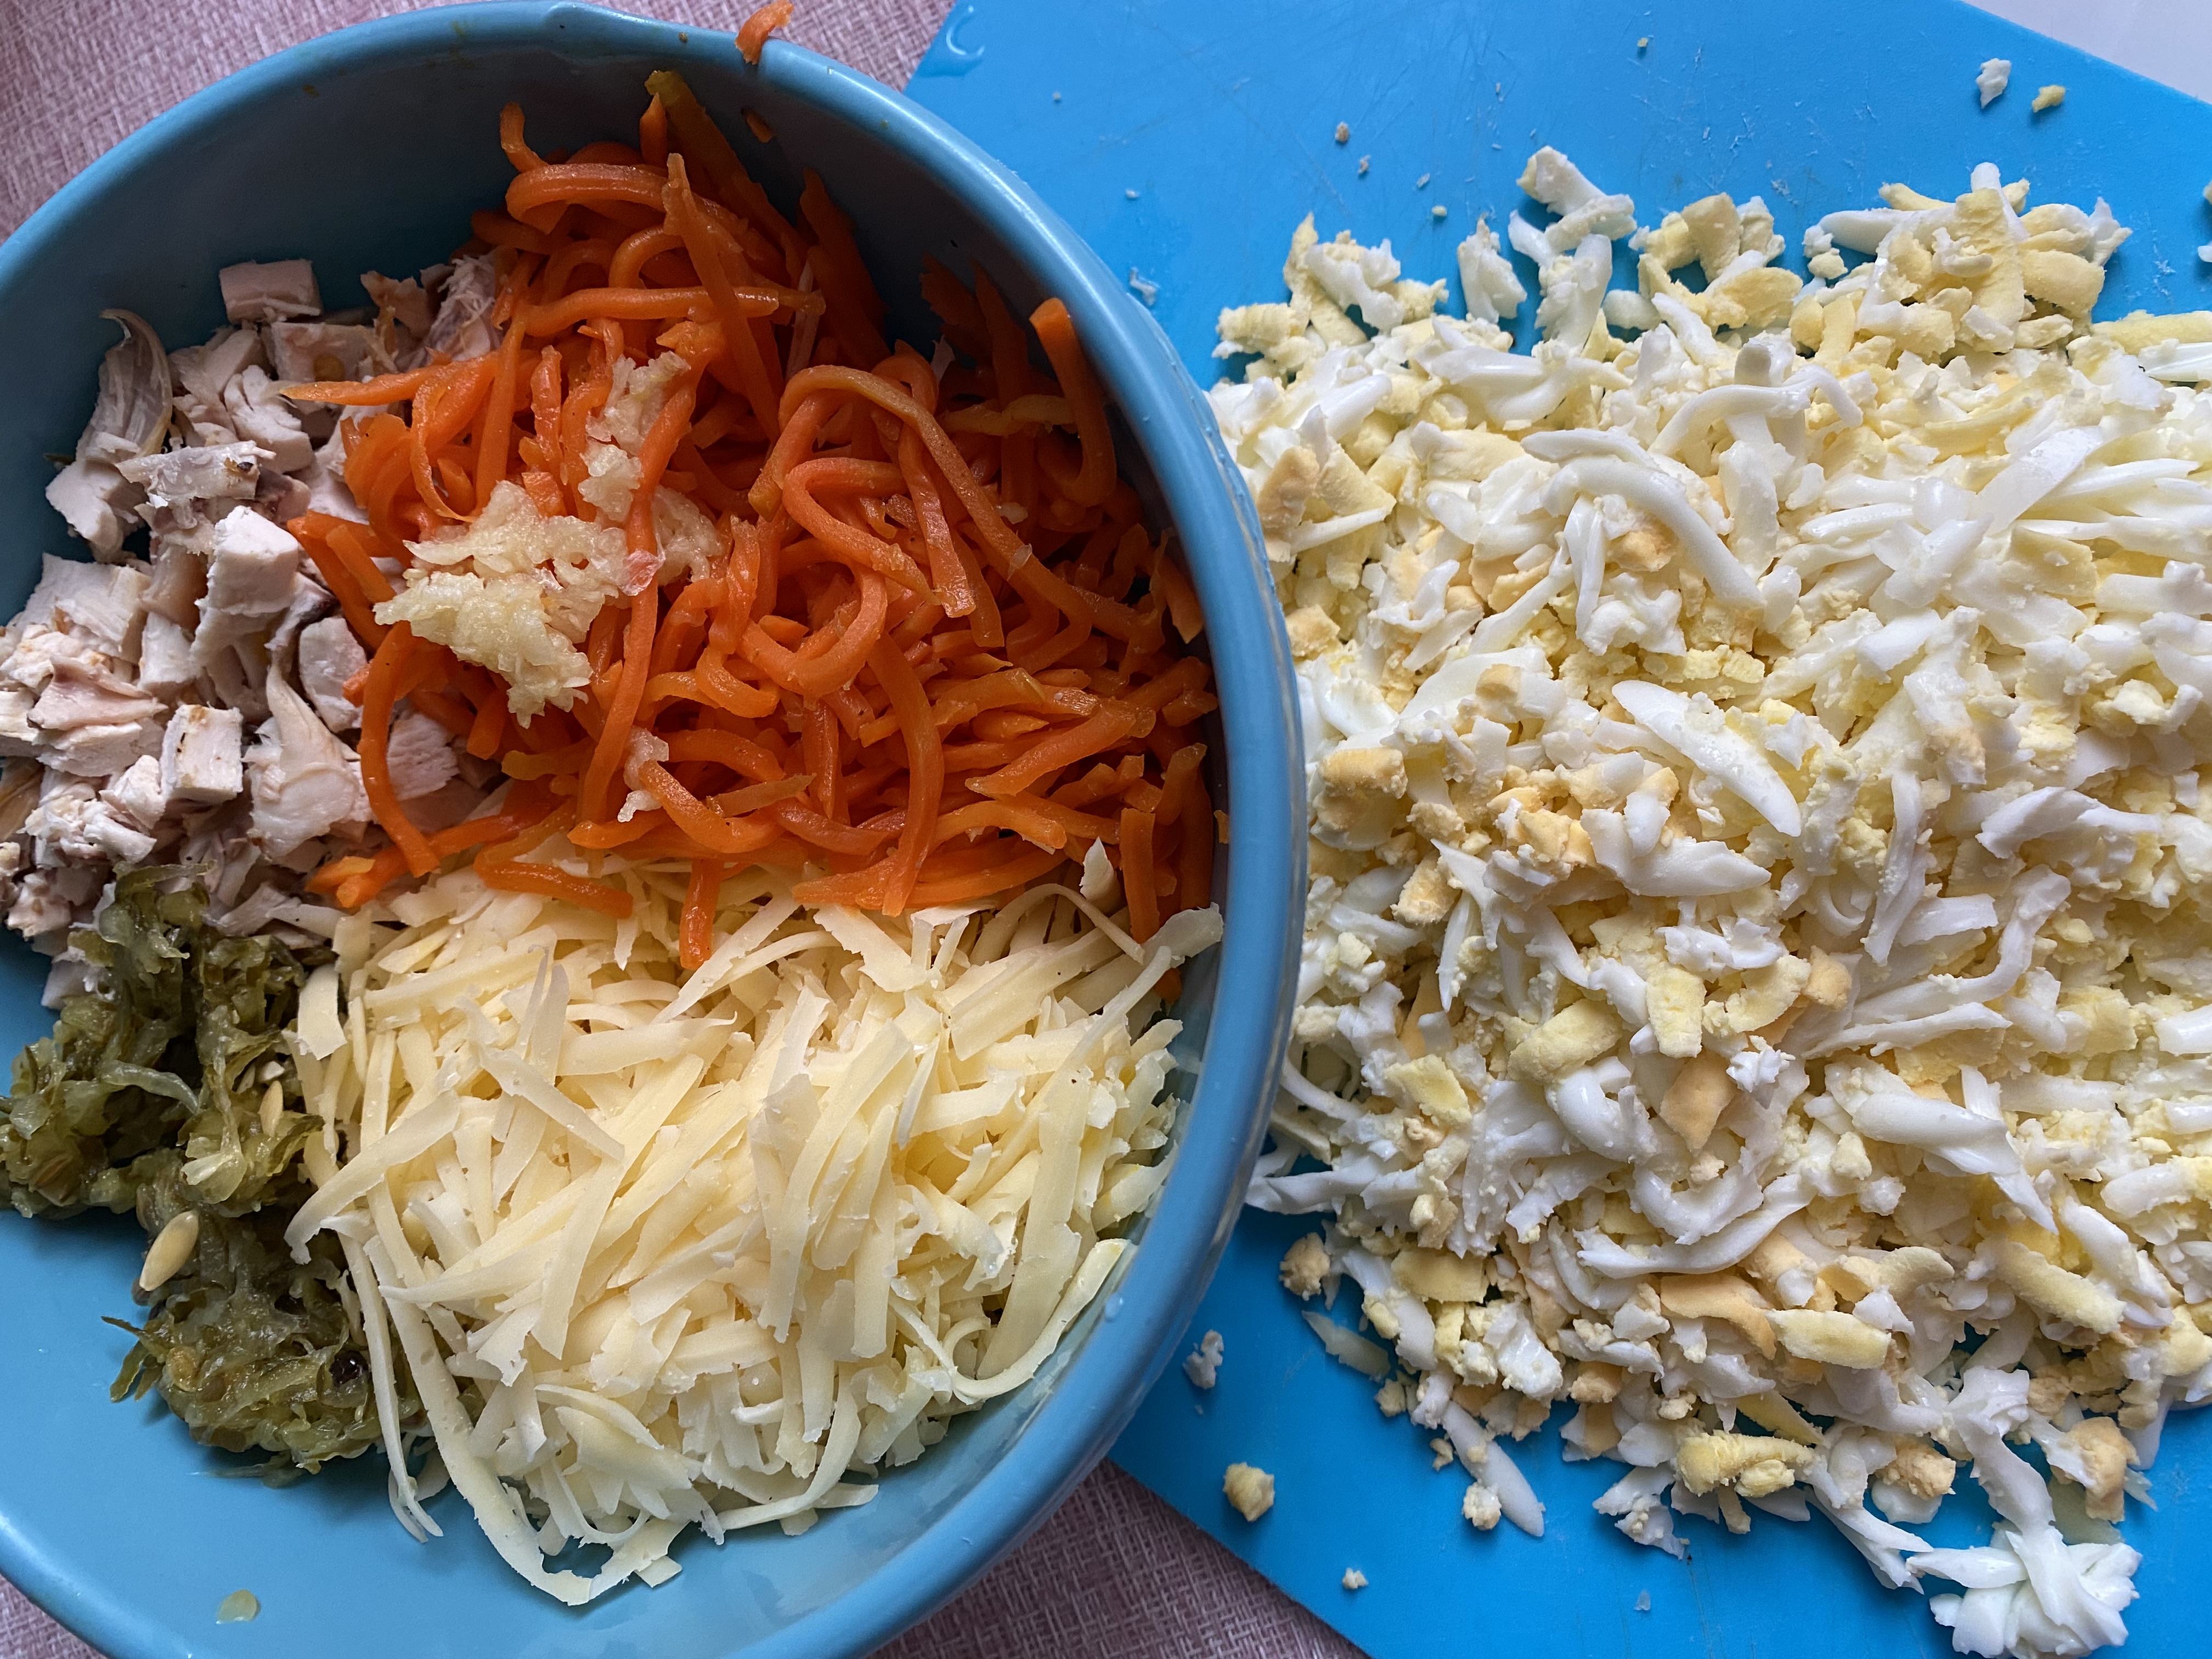 Салат «Лисичка» с корейской морковкой